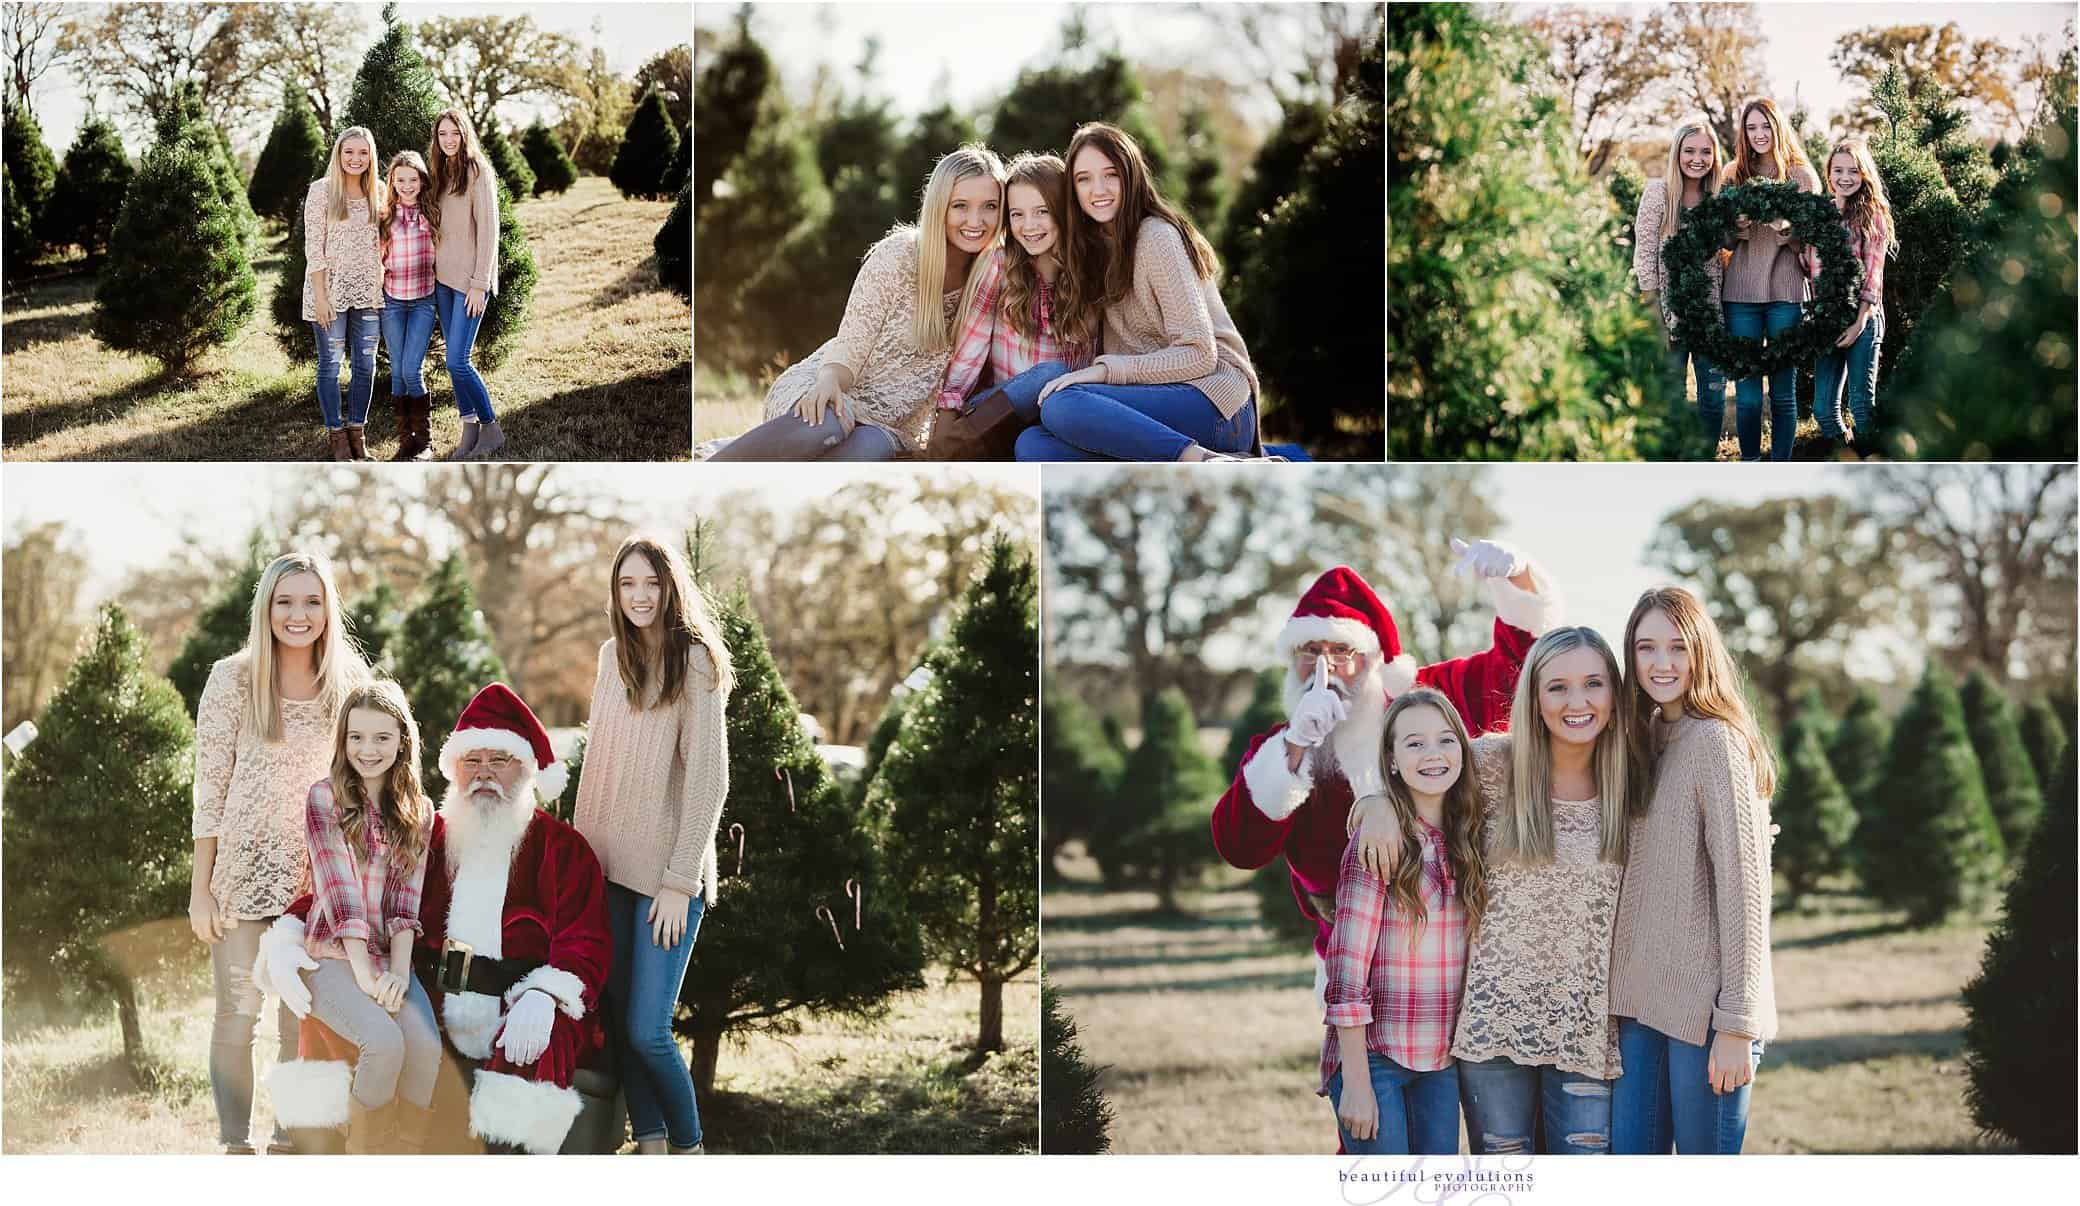 Christmas Mini Family Photography Beautiful Evolutions 2017 9